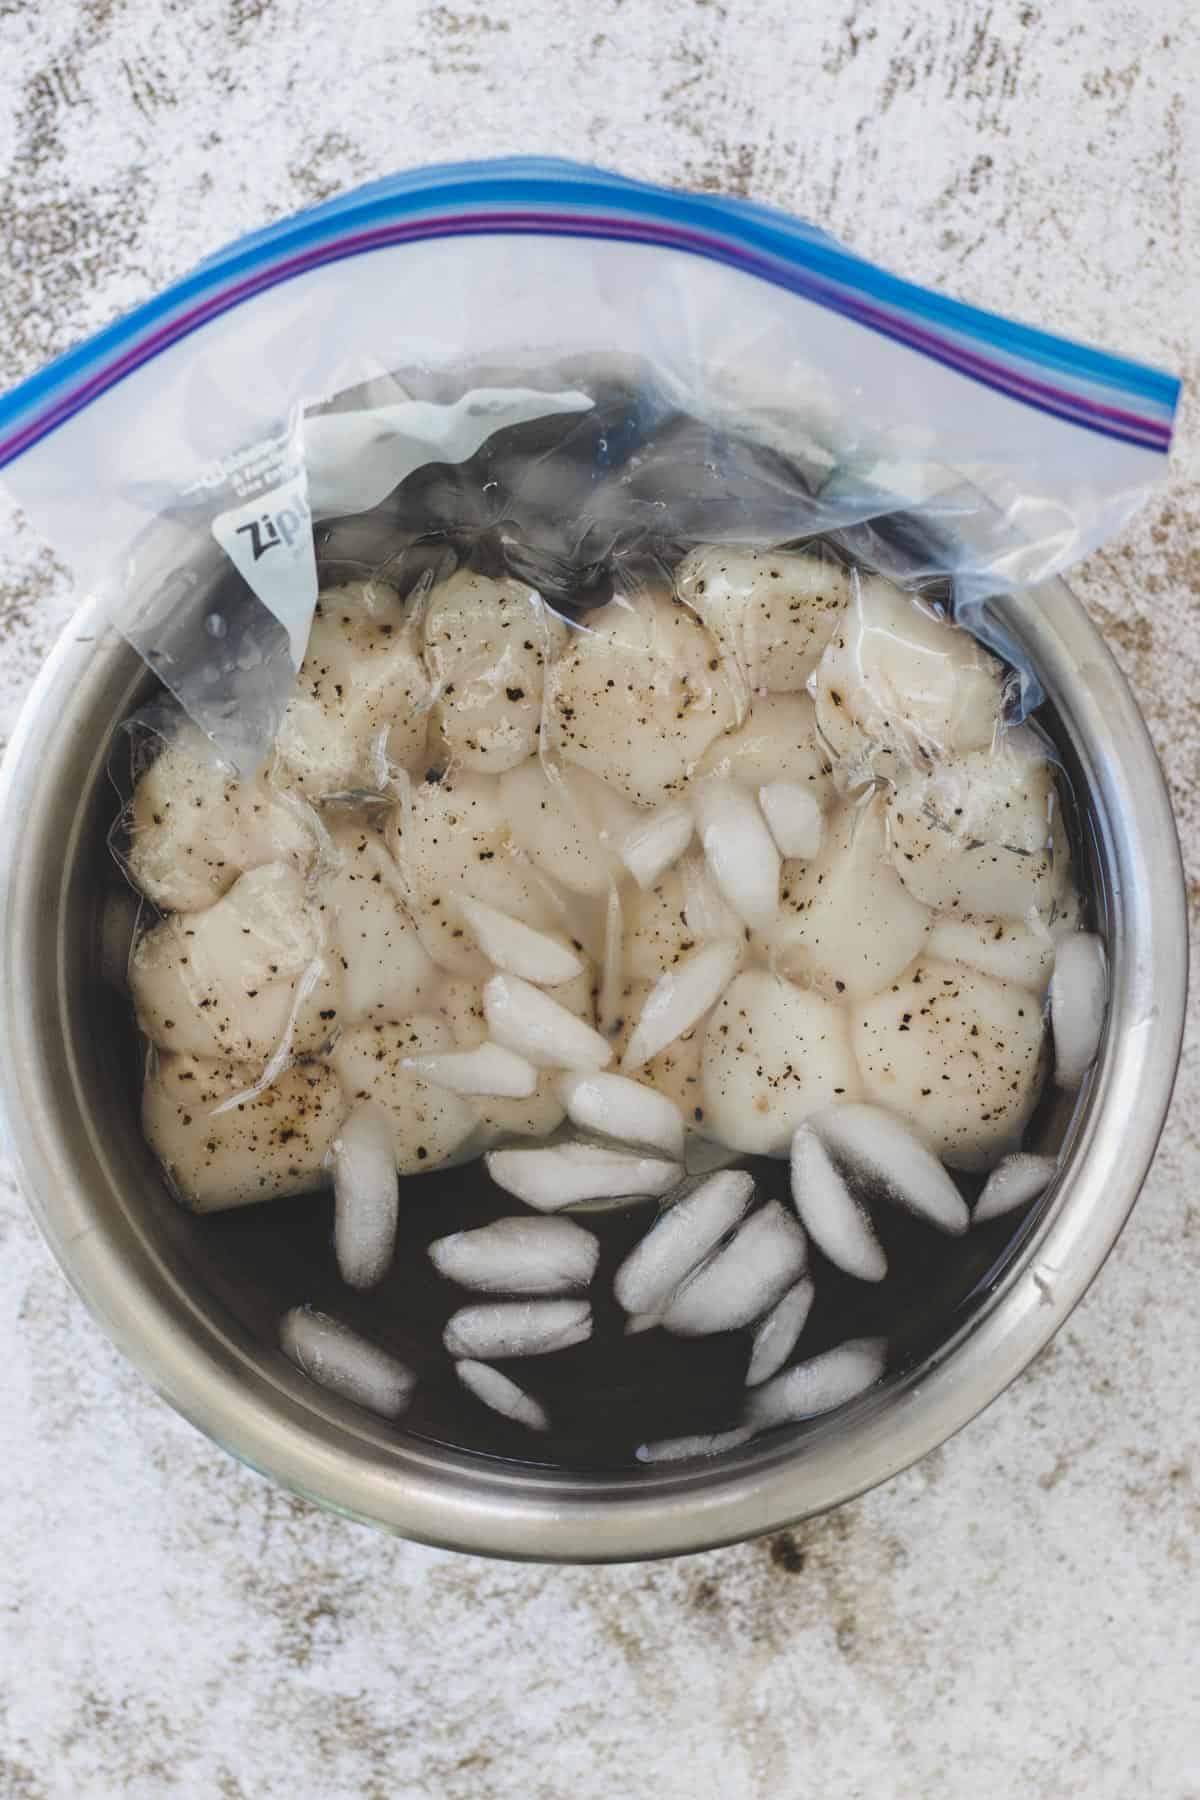 Scallops in an ice bath.